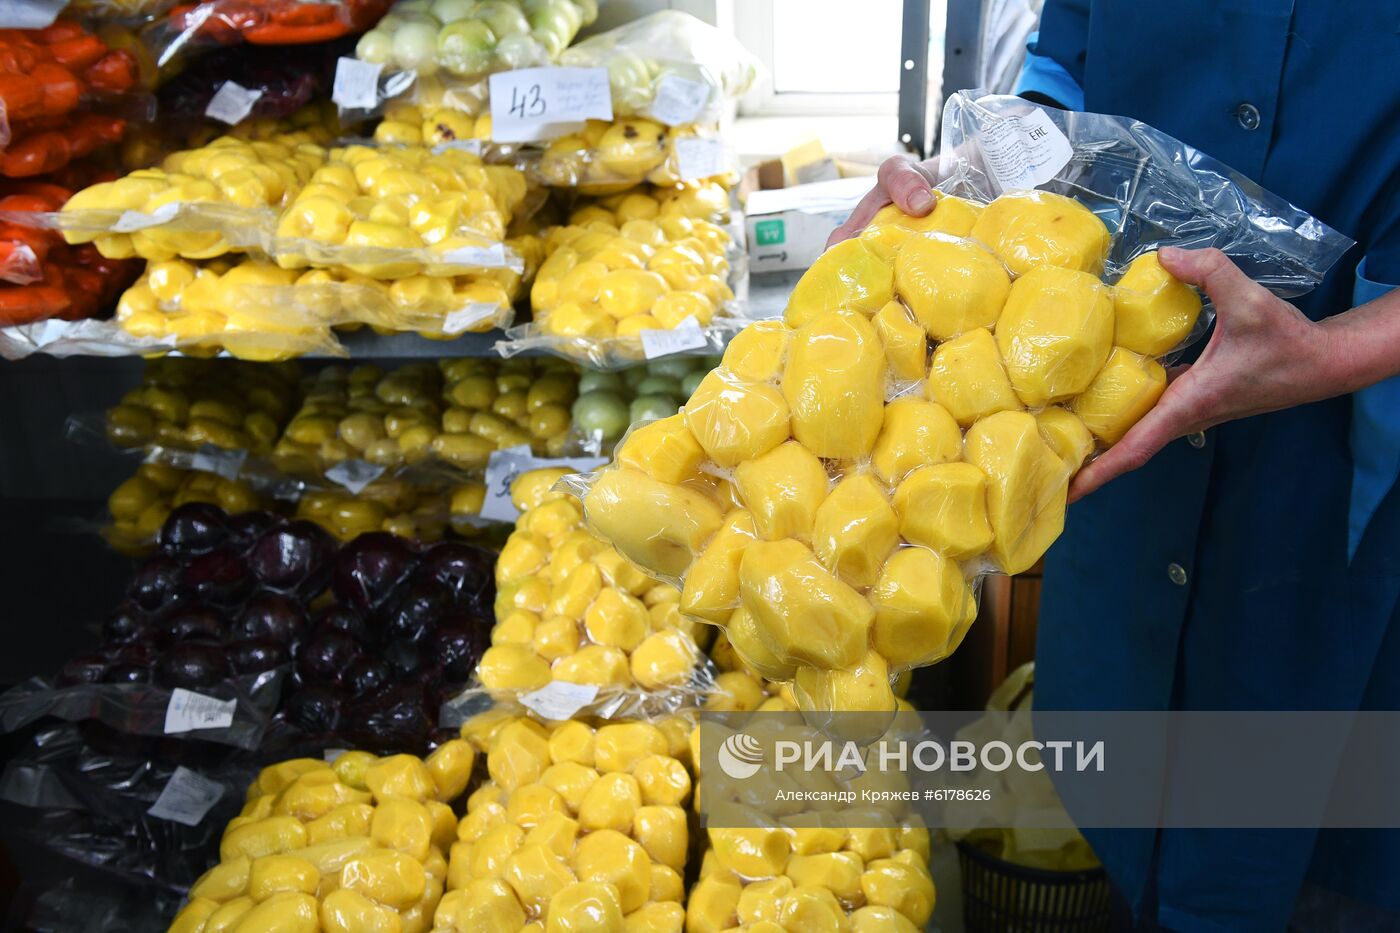 МАУ "Комбинат питания" в Новосибирске  